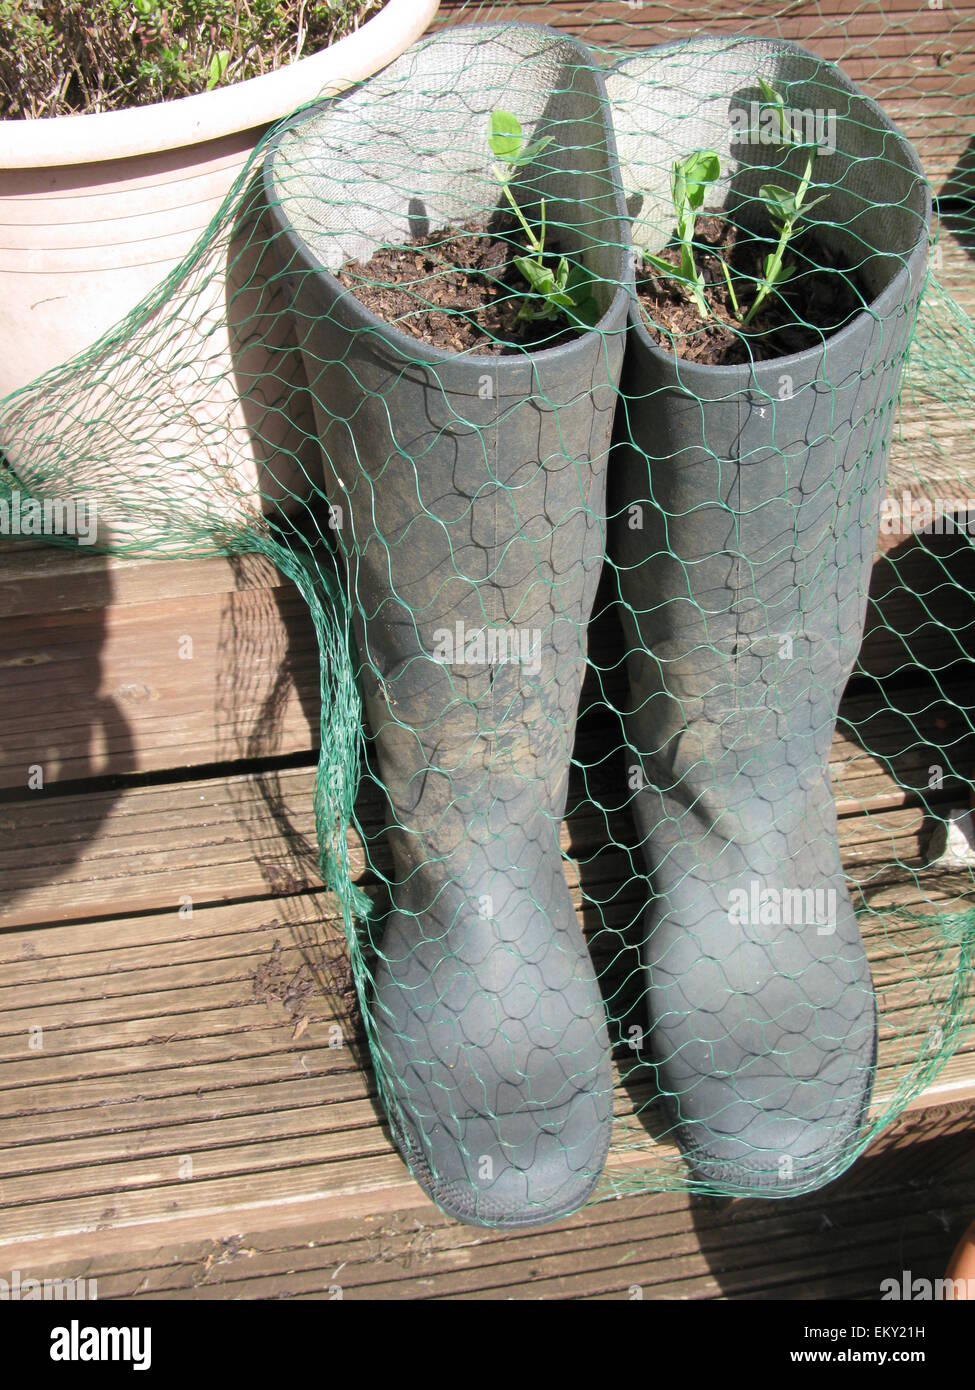 Sweet peas in Wellington boots Stock Photo